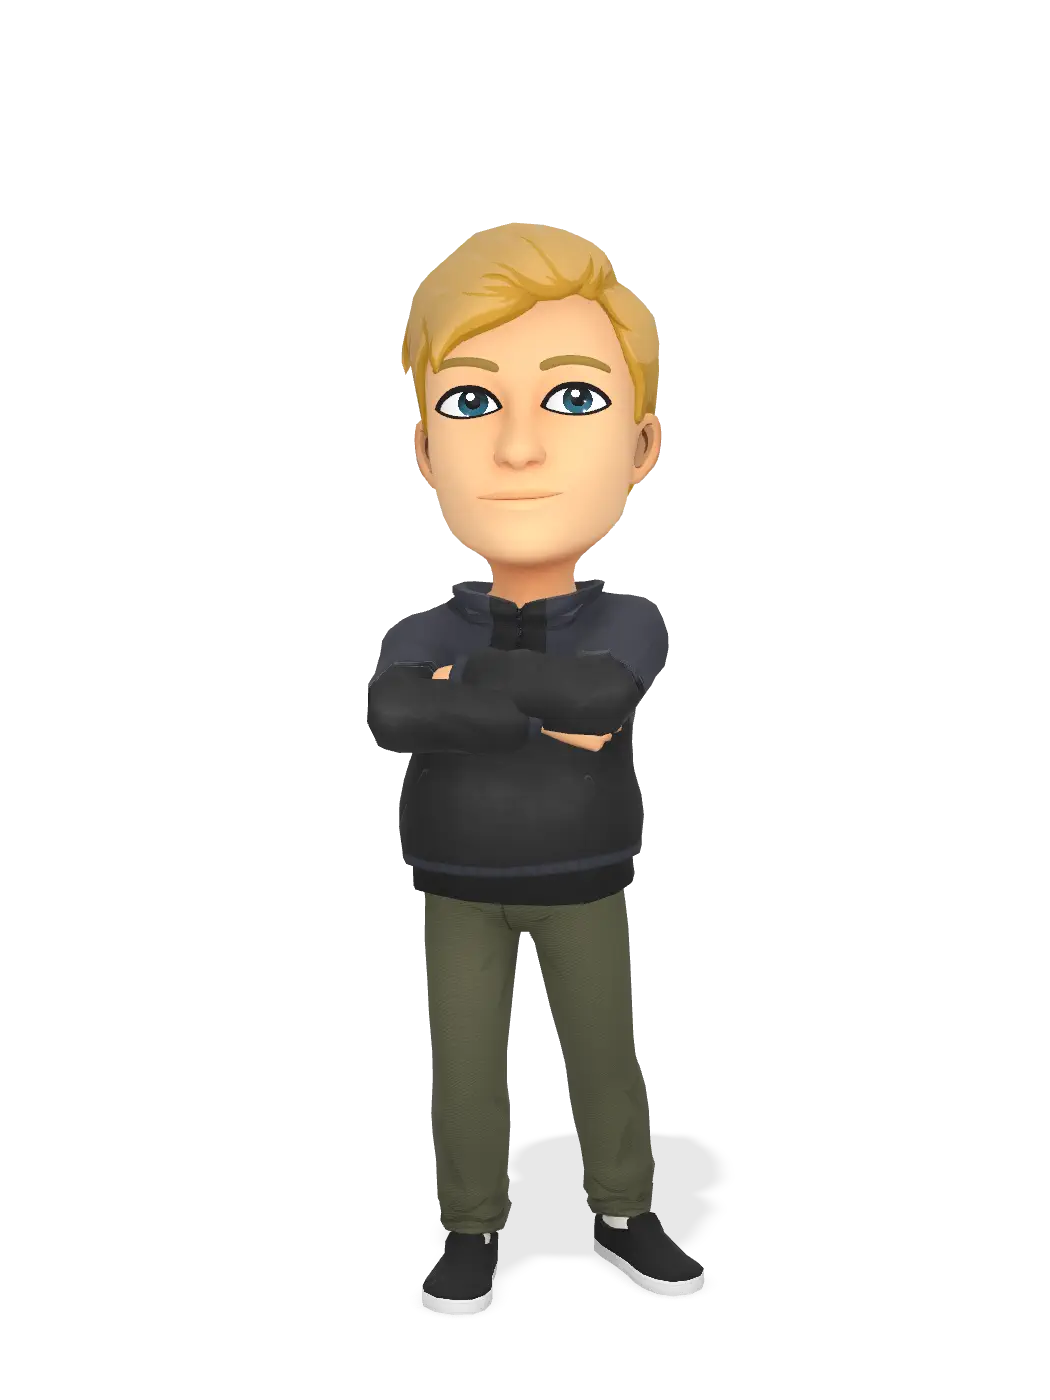 3D Bitmoji for matranc03 avatar